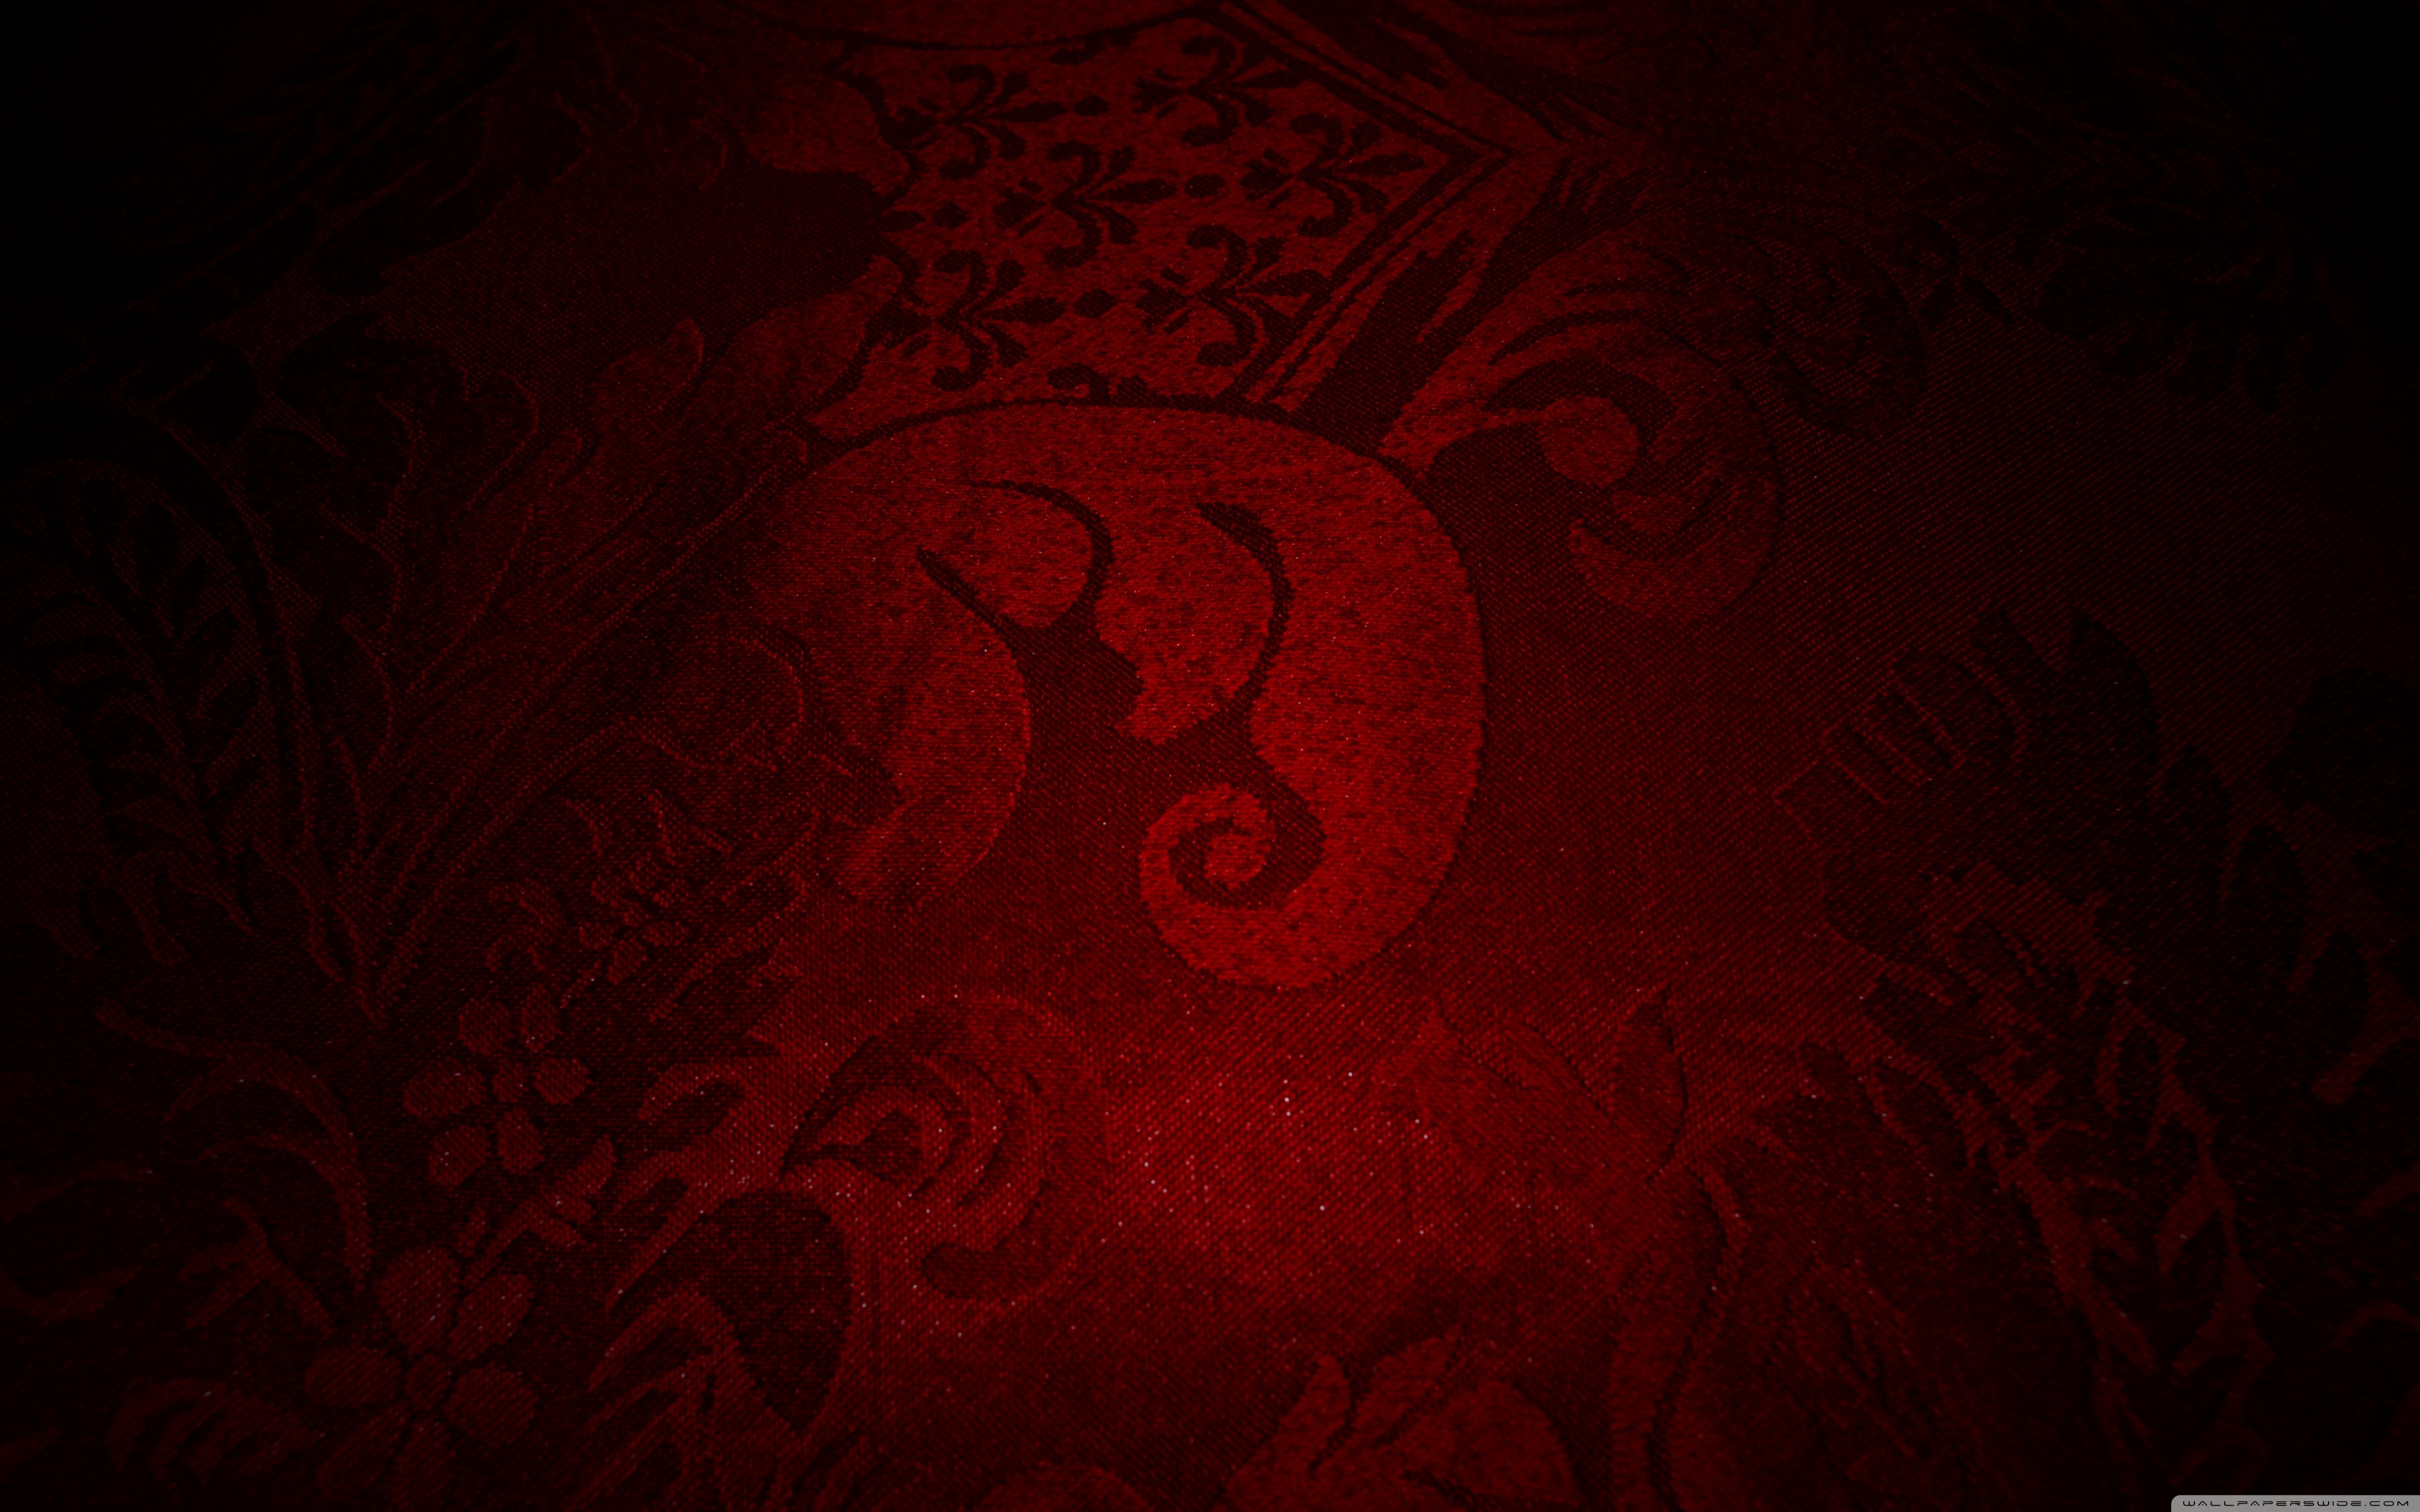 Red Bordeaux Wallpaper X